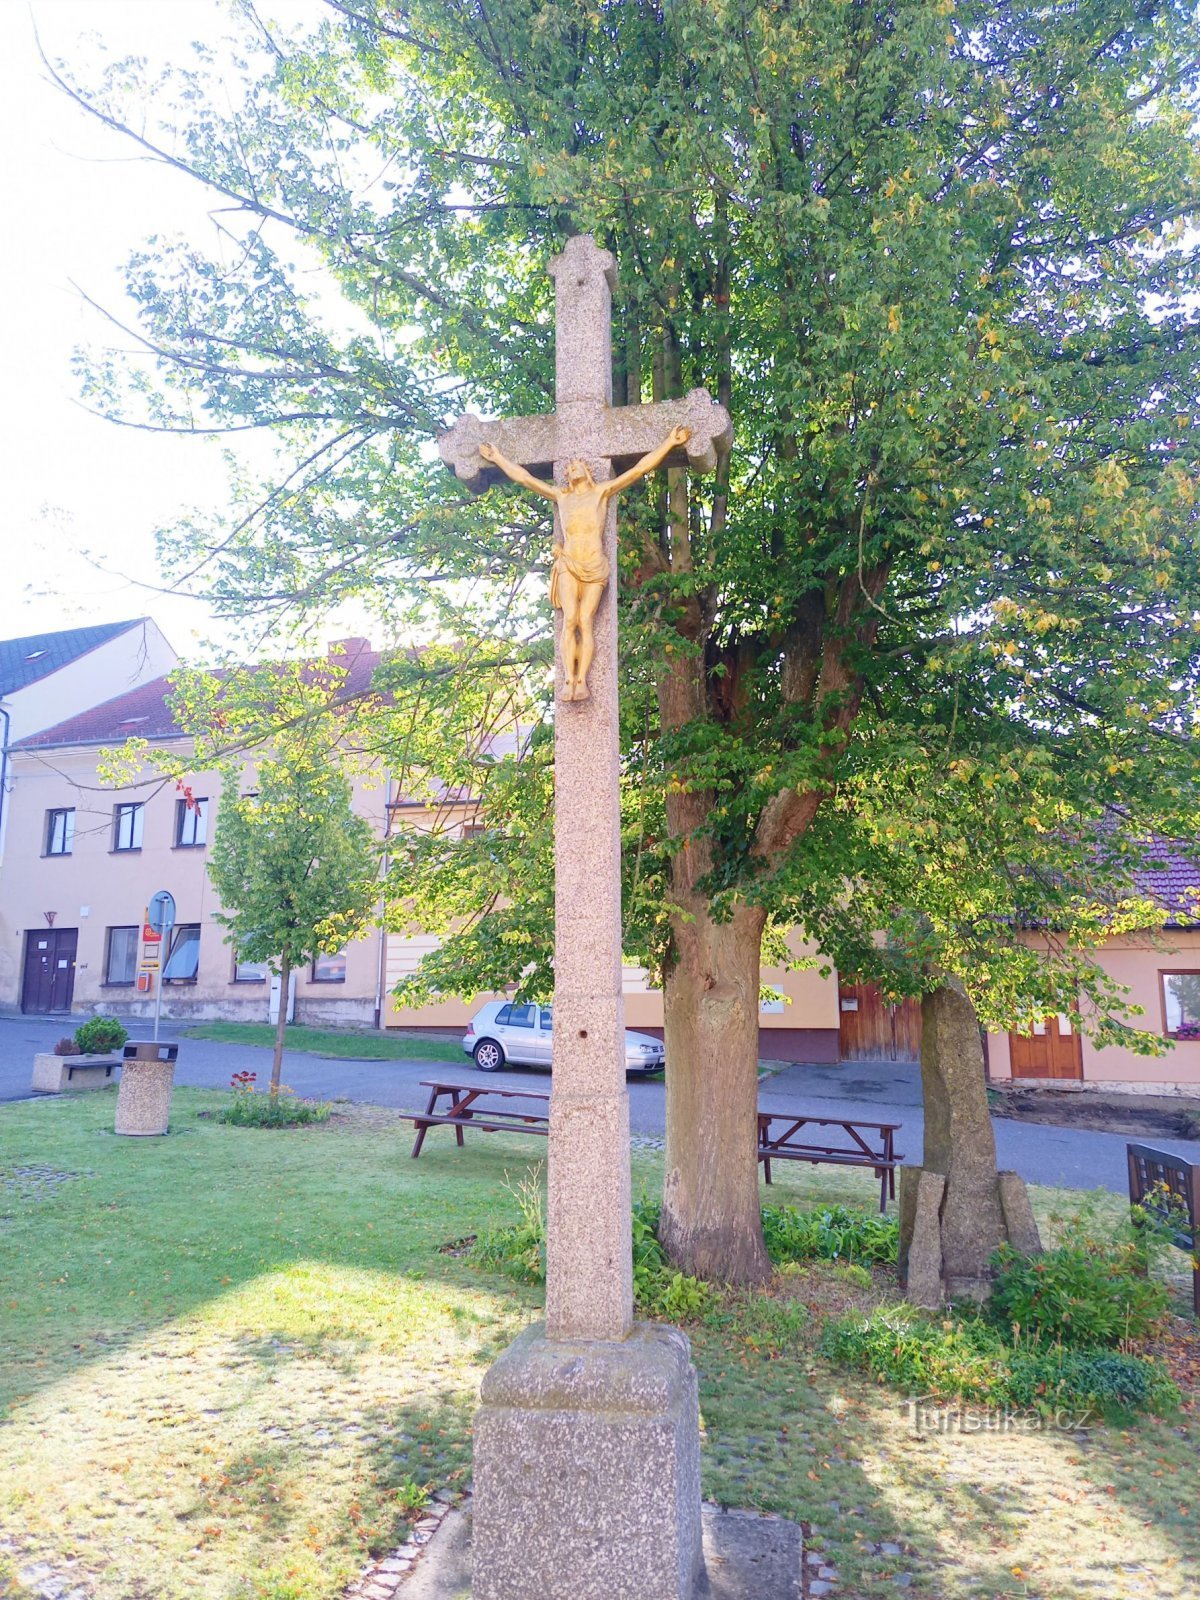 2. Kruis uit 1852 op het Prokop Chocholouška-plein